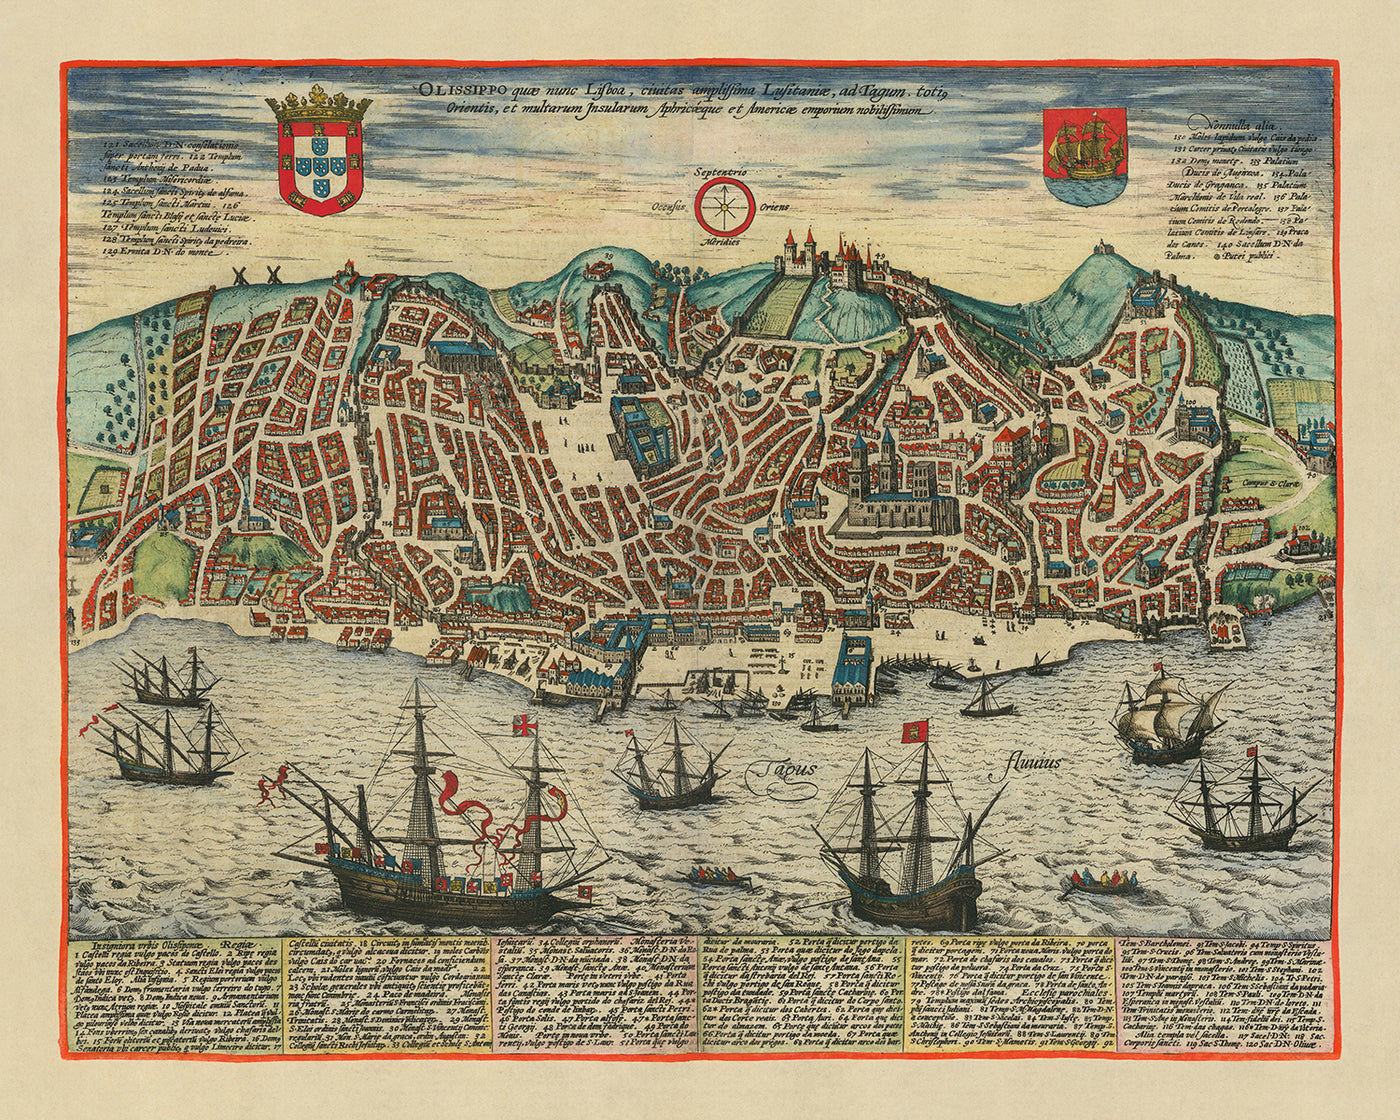 Alte Vogelaugenkarte von Lissabon von Braun, 1596: Castelo de São Jorge, Catedral Se, Baixa, Bairro Alto, Tejo